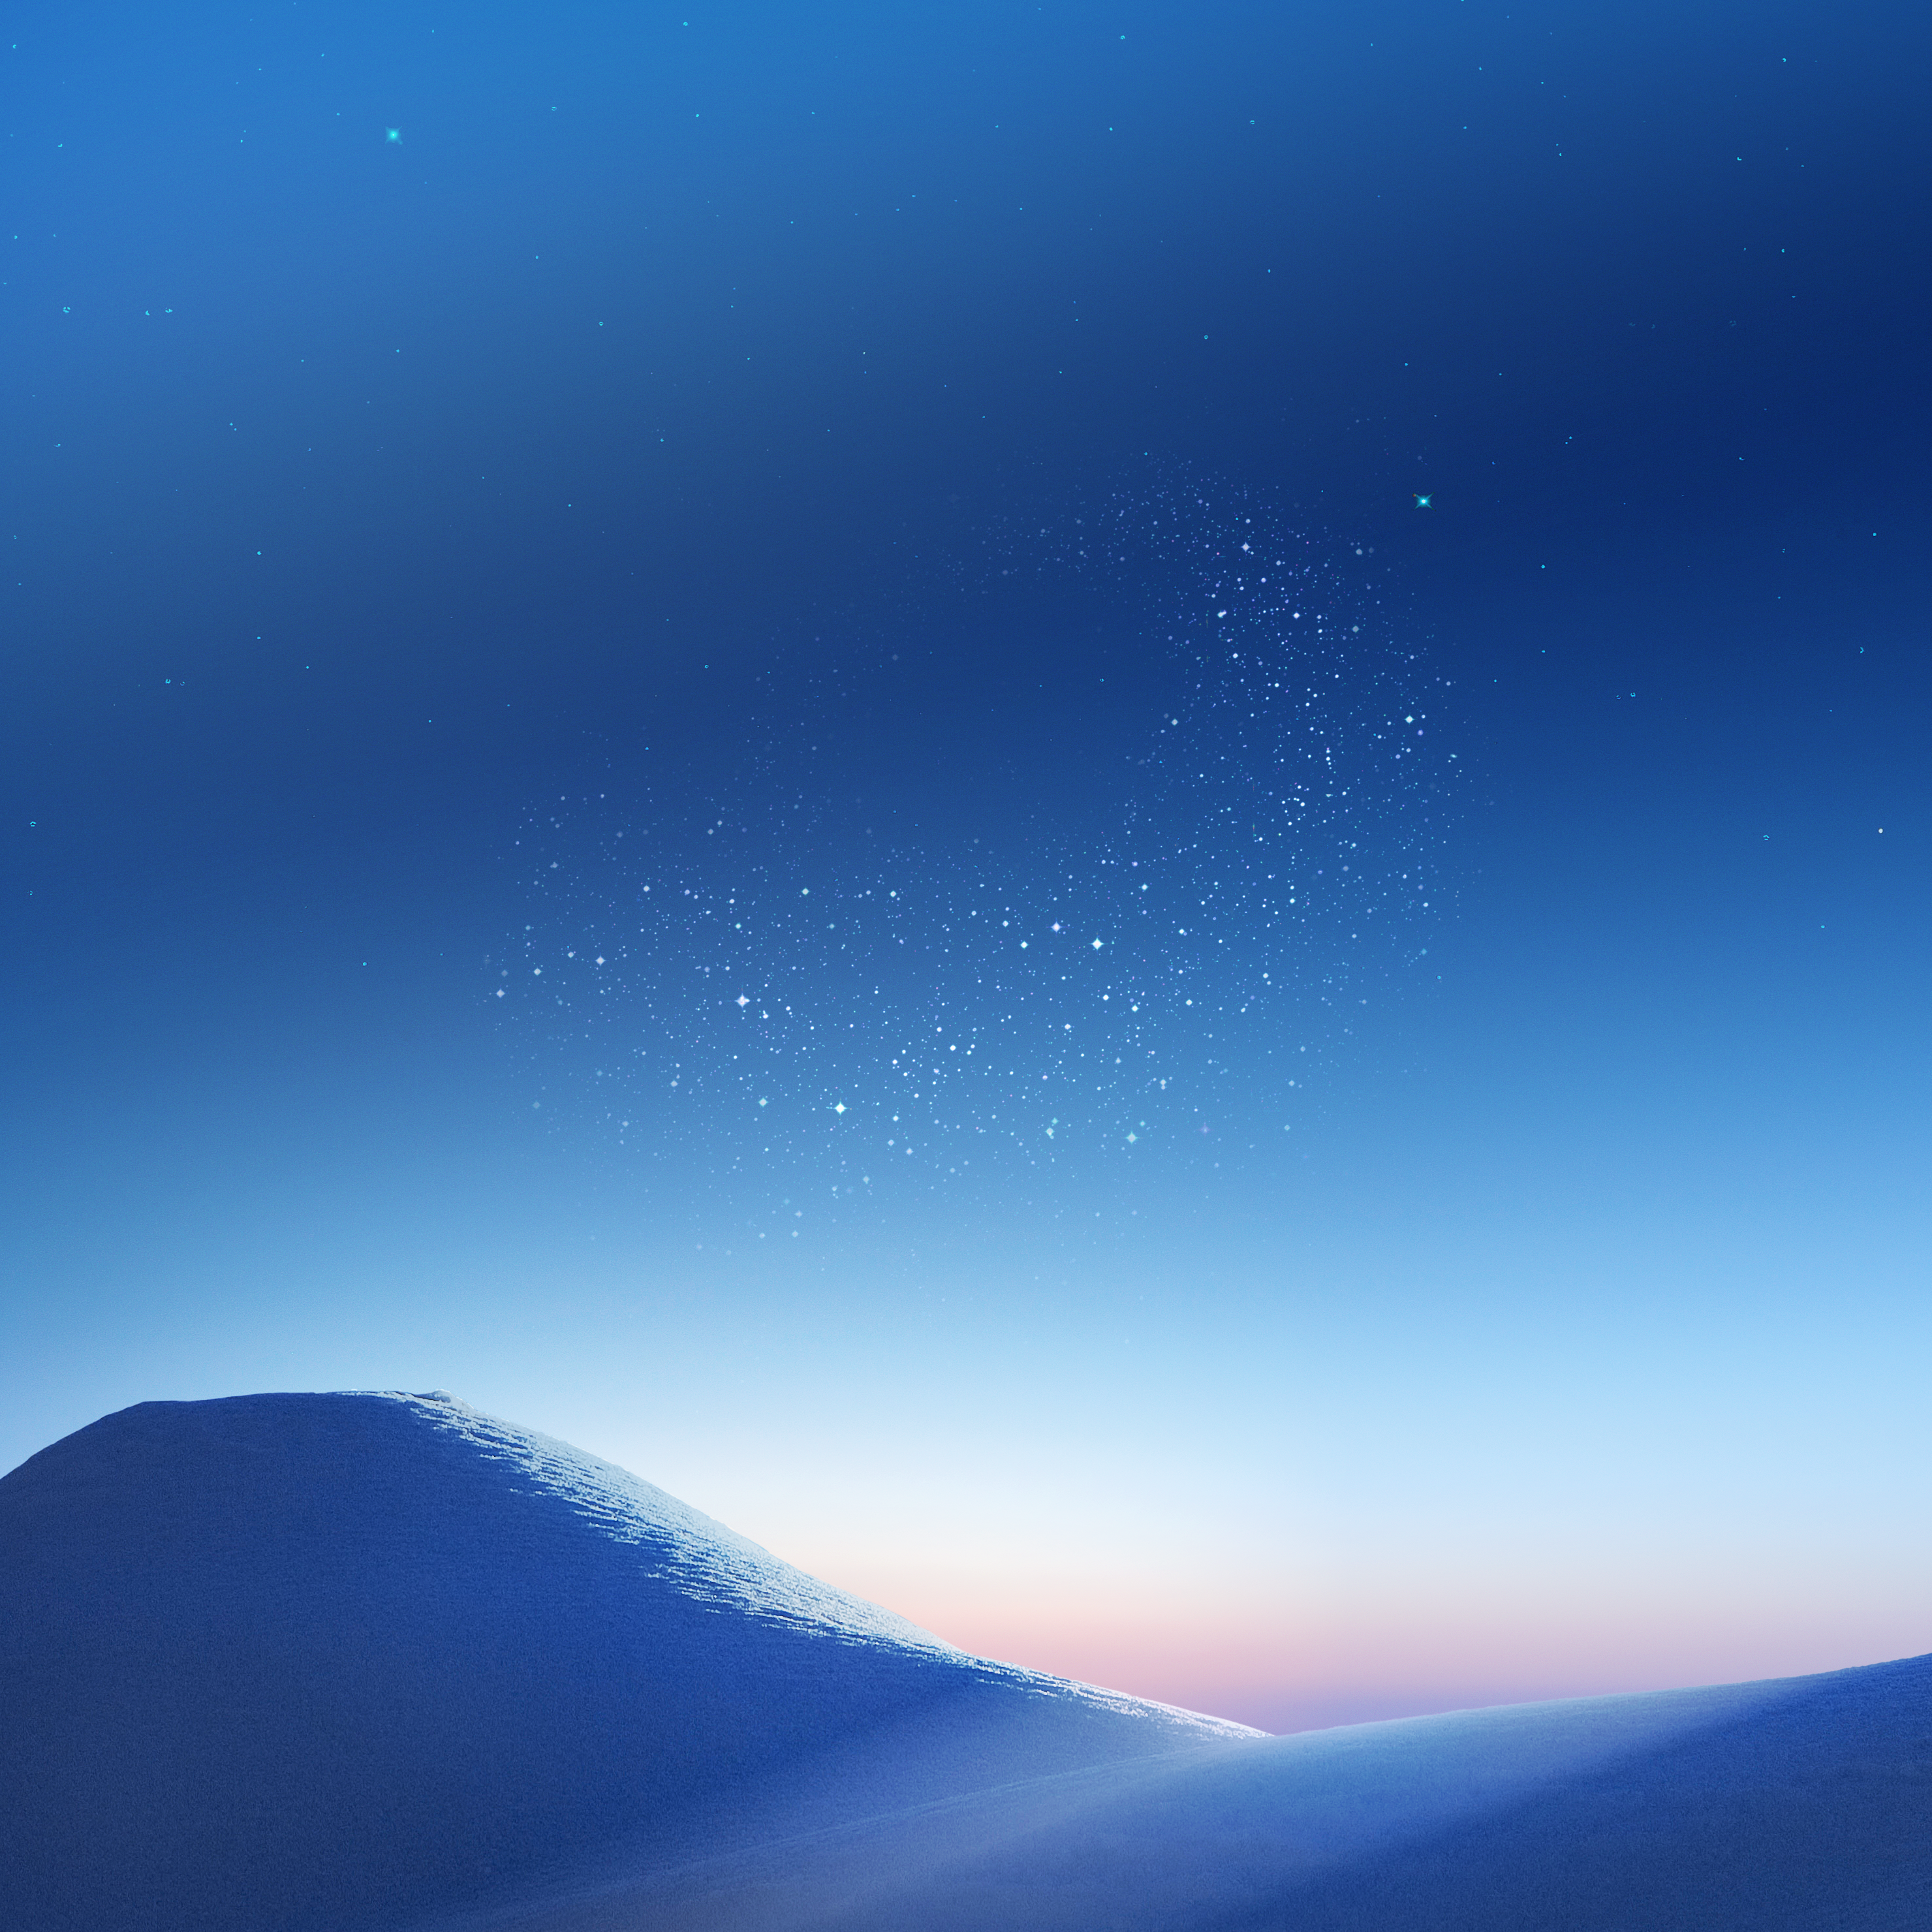 samsung galaxy s8 wallpaper,himmel,blau,atmosphäre,horizont,tagsüber